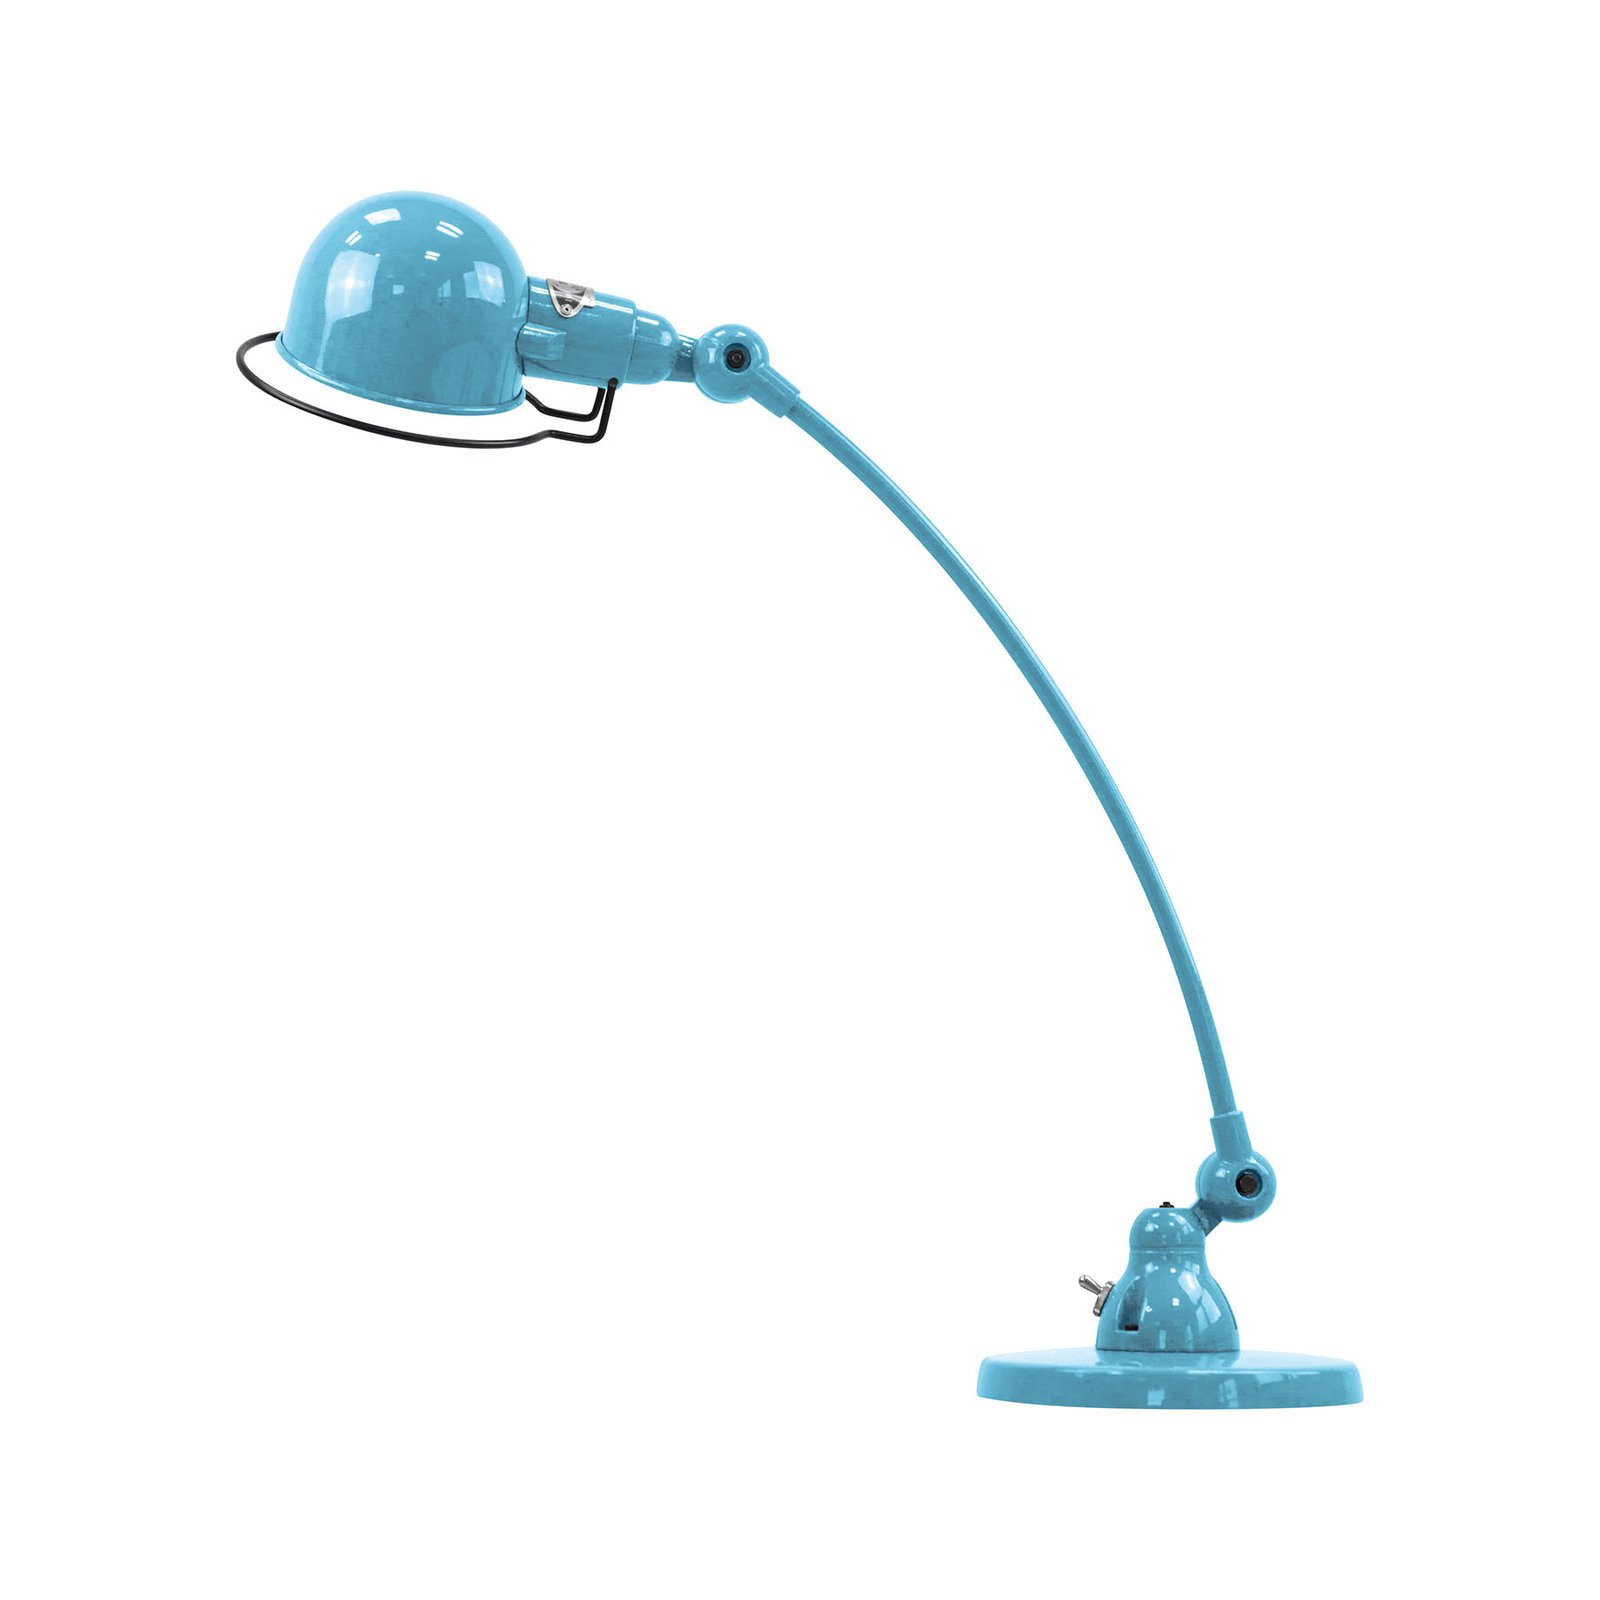 Jieldé Signal SIC400 bordlampe, fod, 1 arm, blå